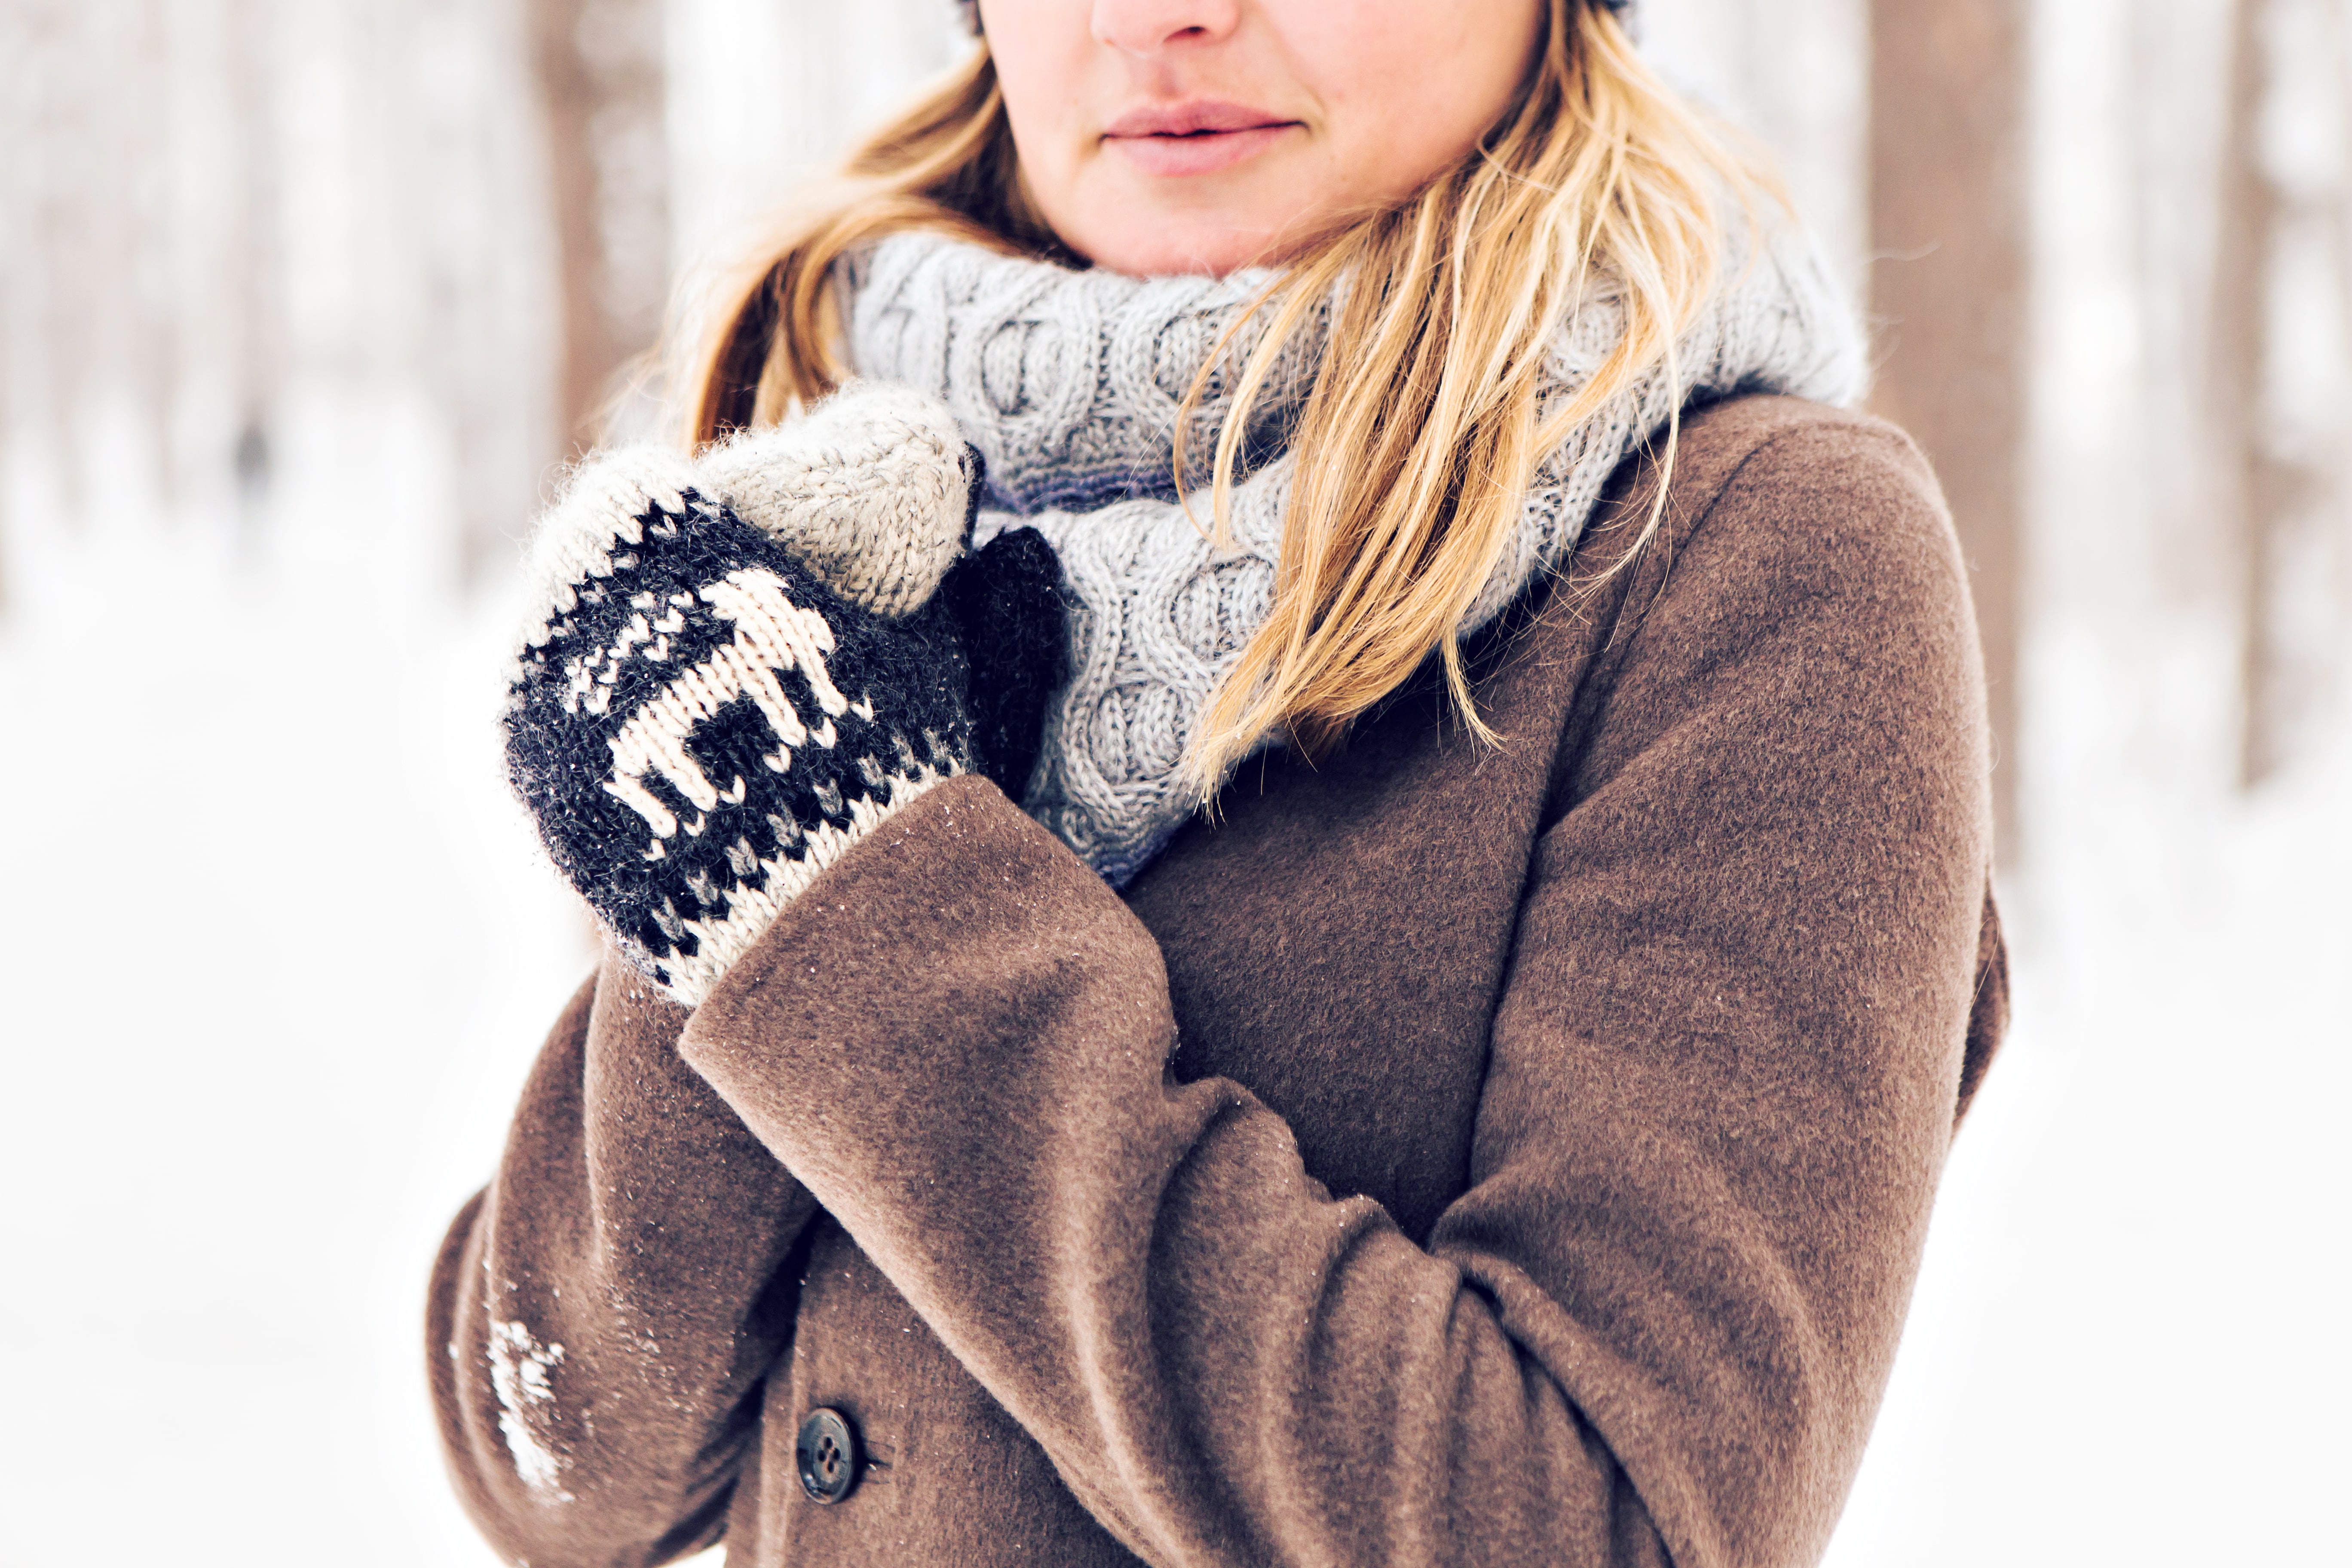 closeup-of-young-woman-in-wintertime-outdoor-snow-PJJDD64-min